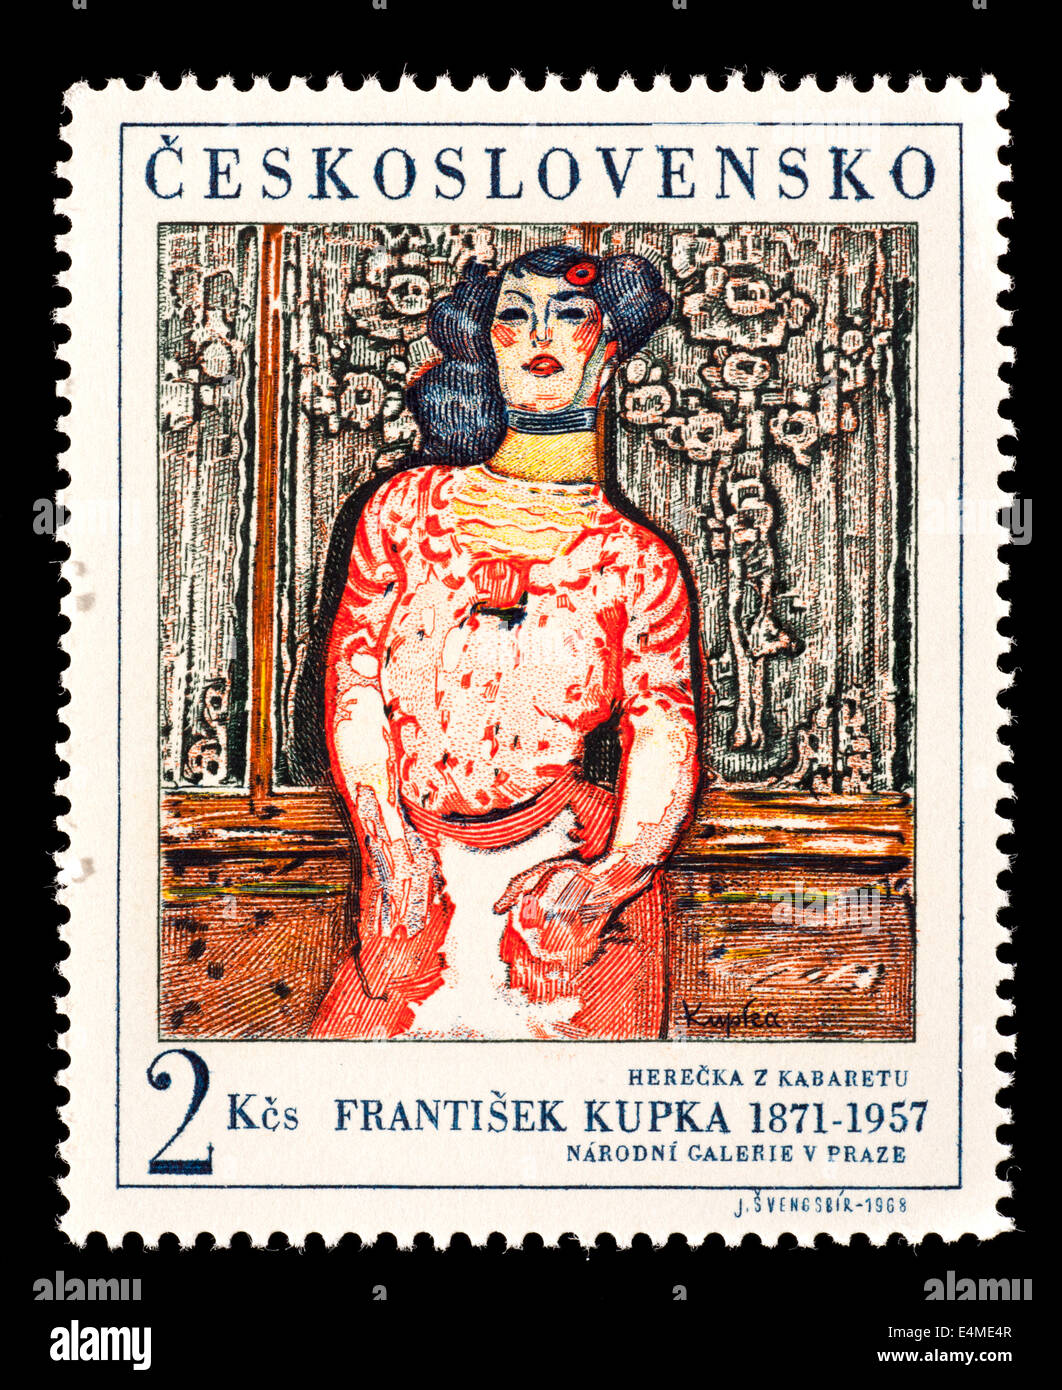 Postage stamp from Czechoslovakia depicting the Frantisek Kupka painting "Cabaret Performer" Stock Photo